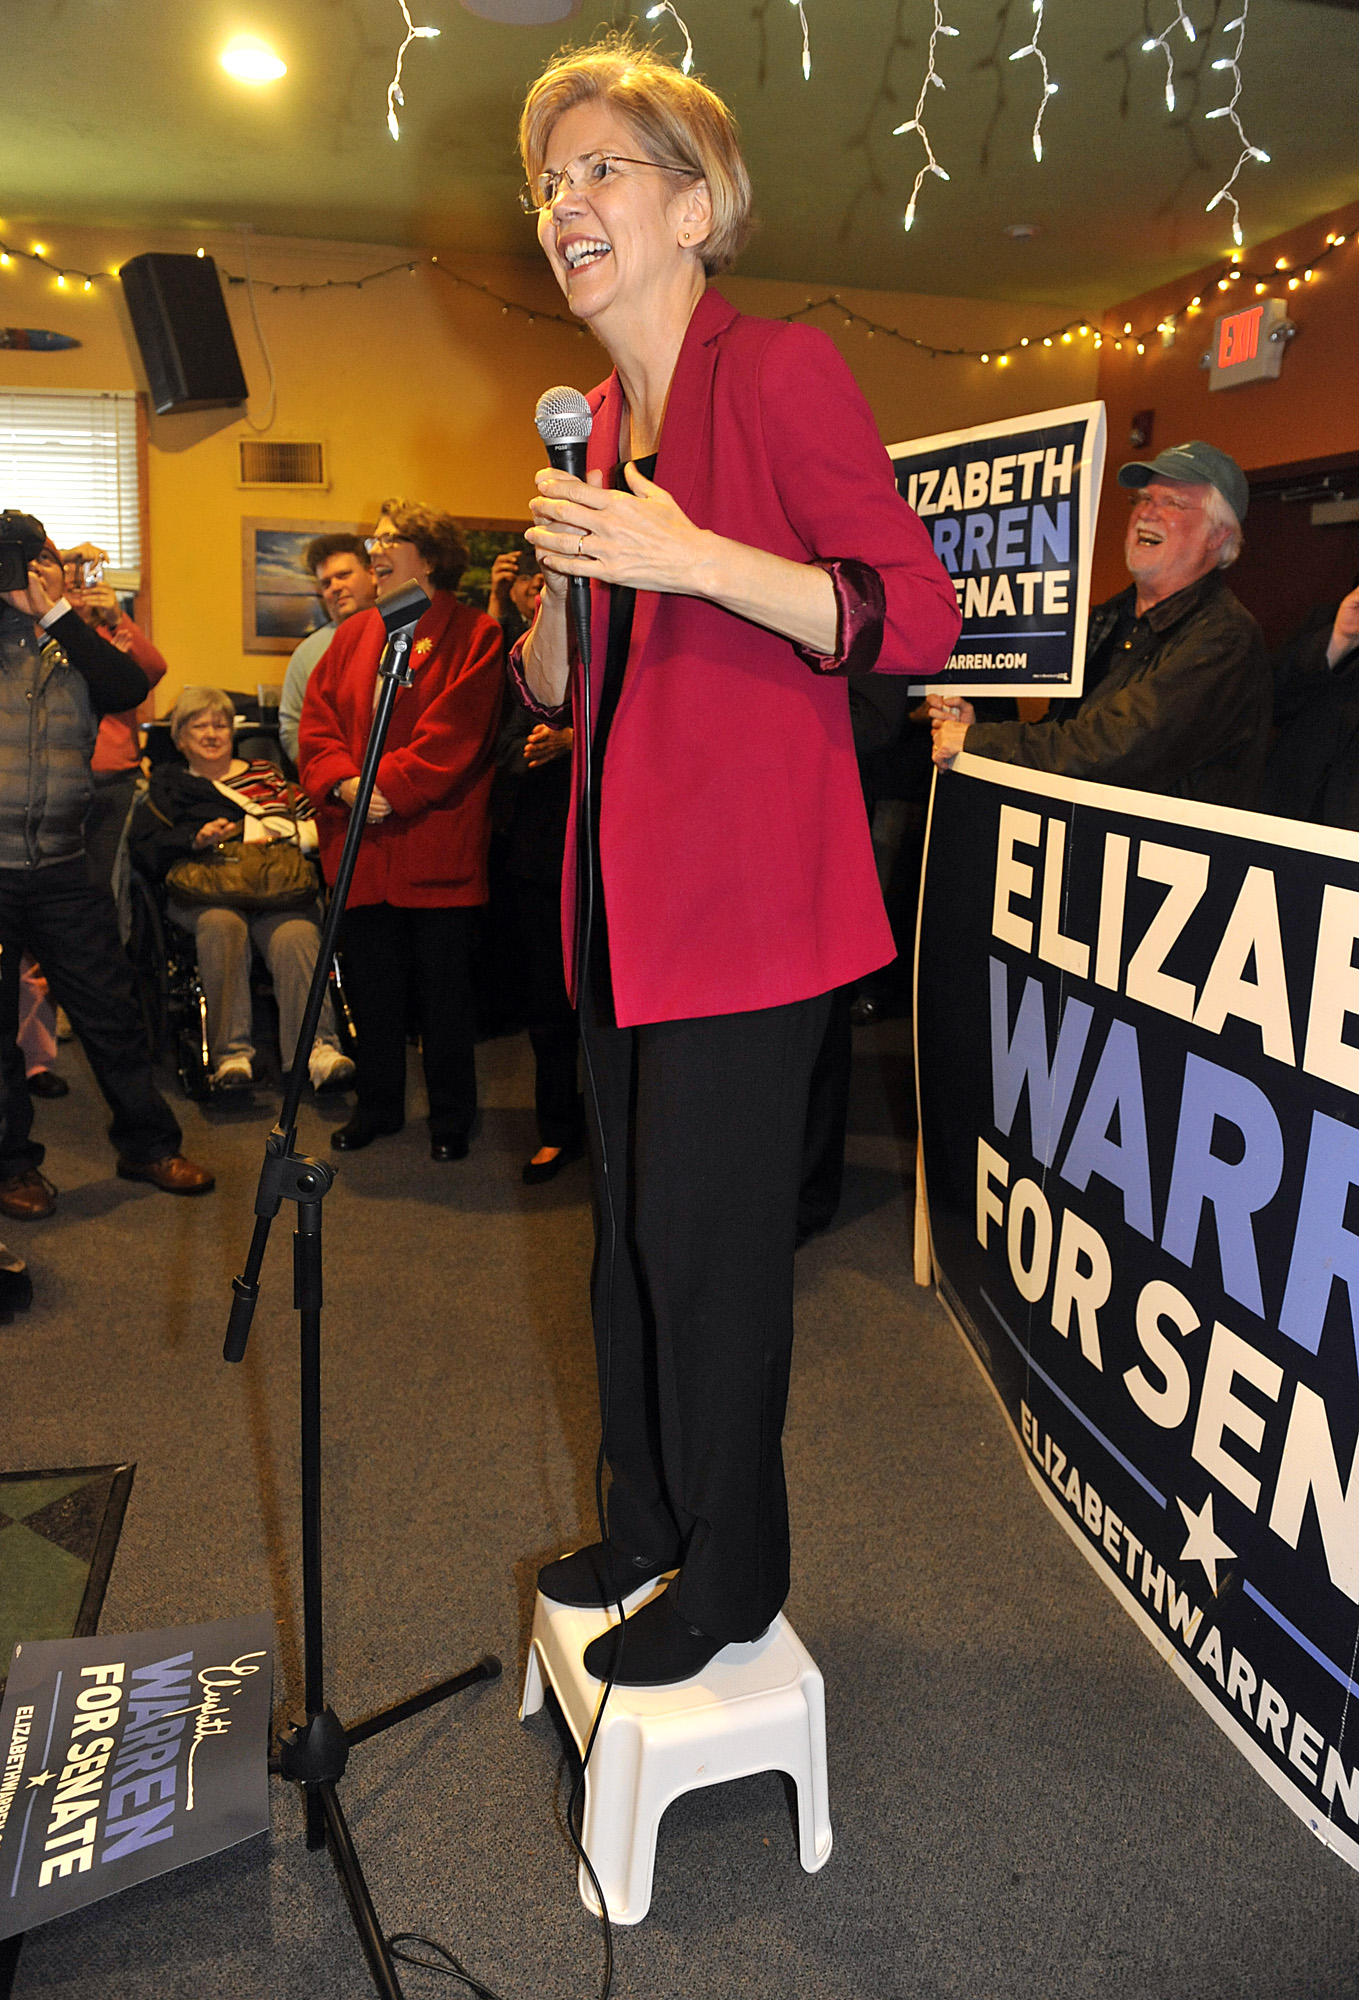 Days before the election, then U.S. Senate candiidate Elizabeth Warren held a rally at the Harvest Cafe in Hudson. Warren defeated U.S. Sen. Scott Brown.